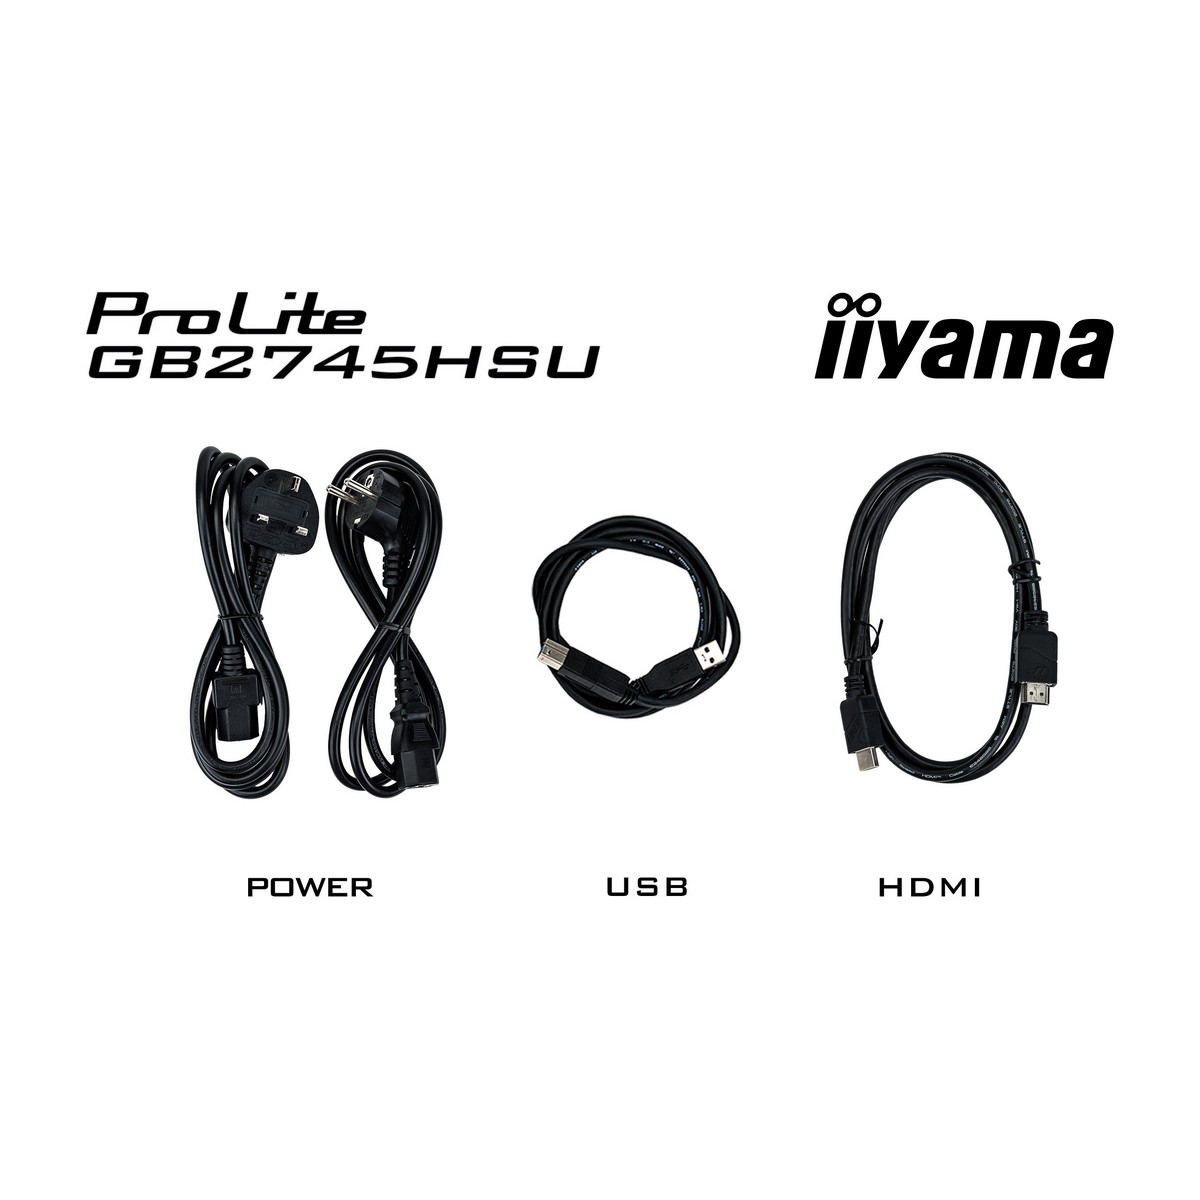 Iiyama - iiyama 27" G-Master GB2745HSU-B1 1920x1080 IPS 100Hz 1ms Freesync Widescreen Gaming Monitor